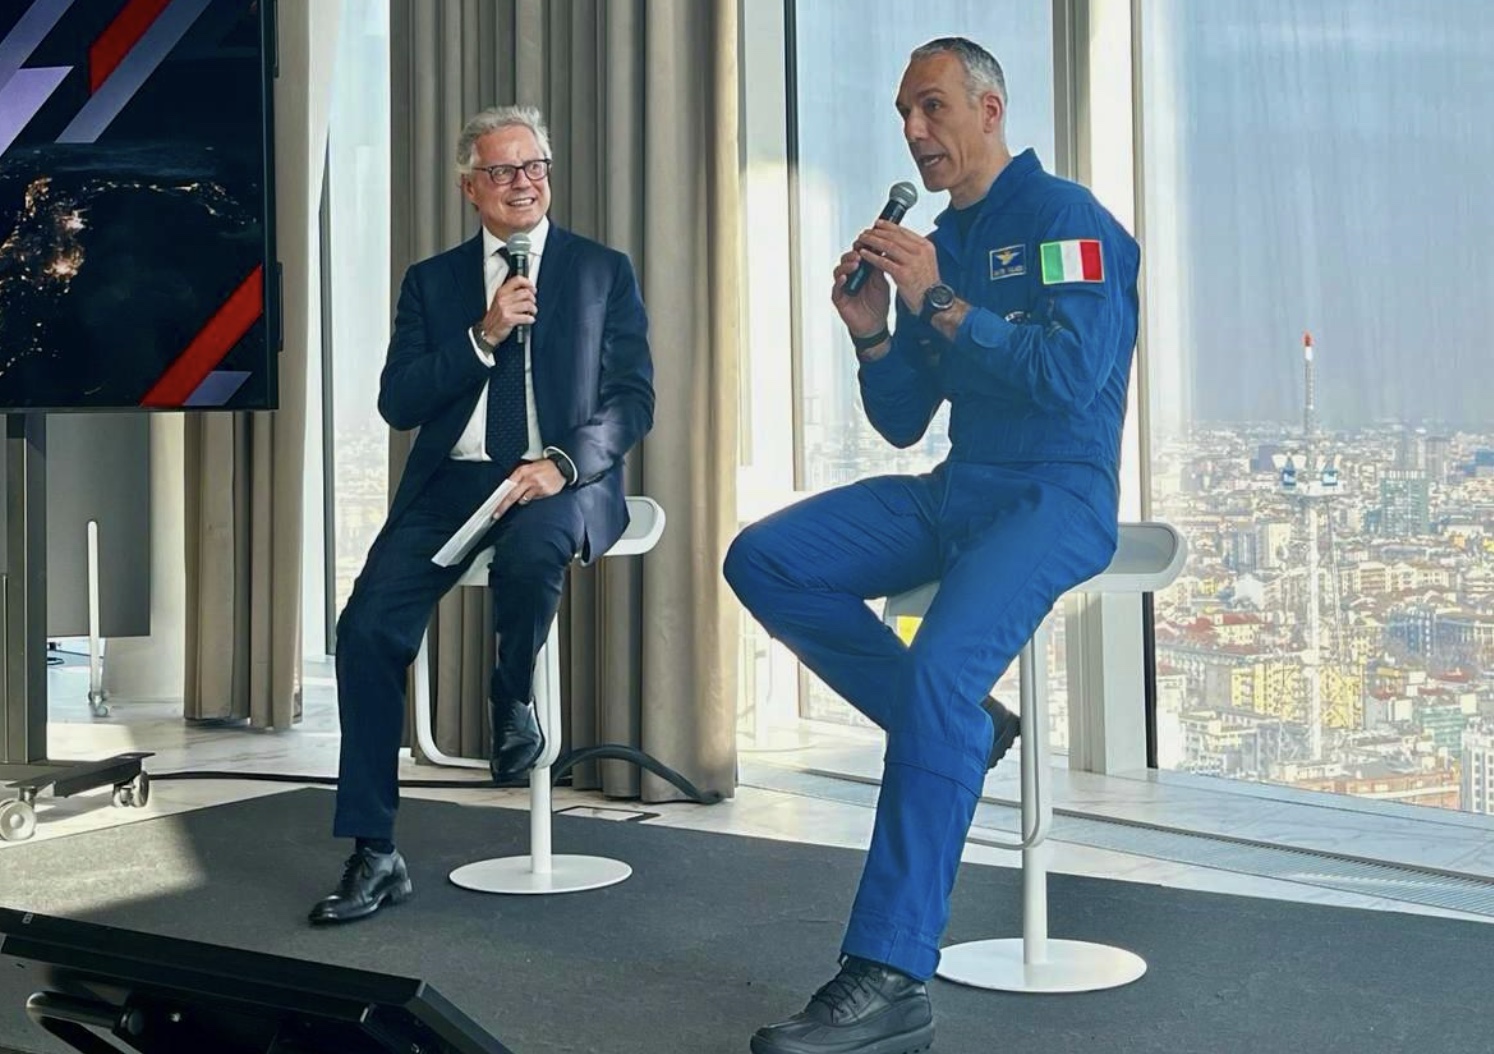 Aeronautica Militare وPwC Italia: رحلات الفضاء البشرية كفرصة للشركات في اقتصاد الفضاء الجديد